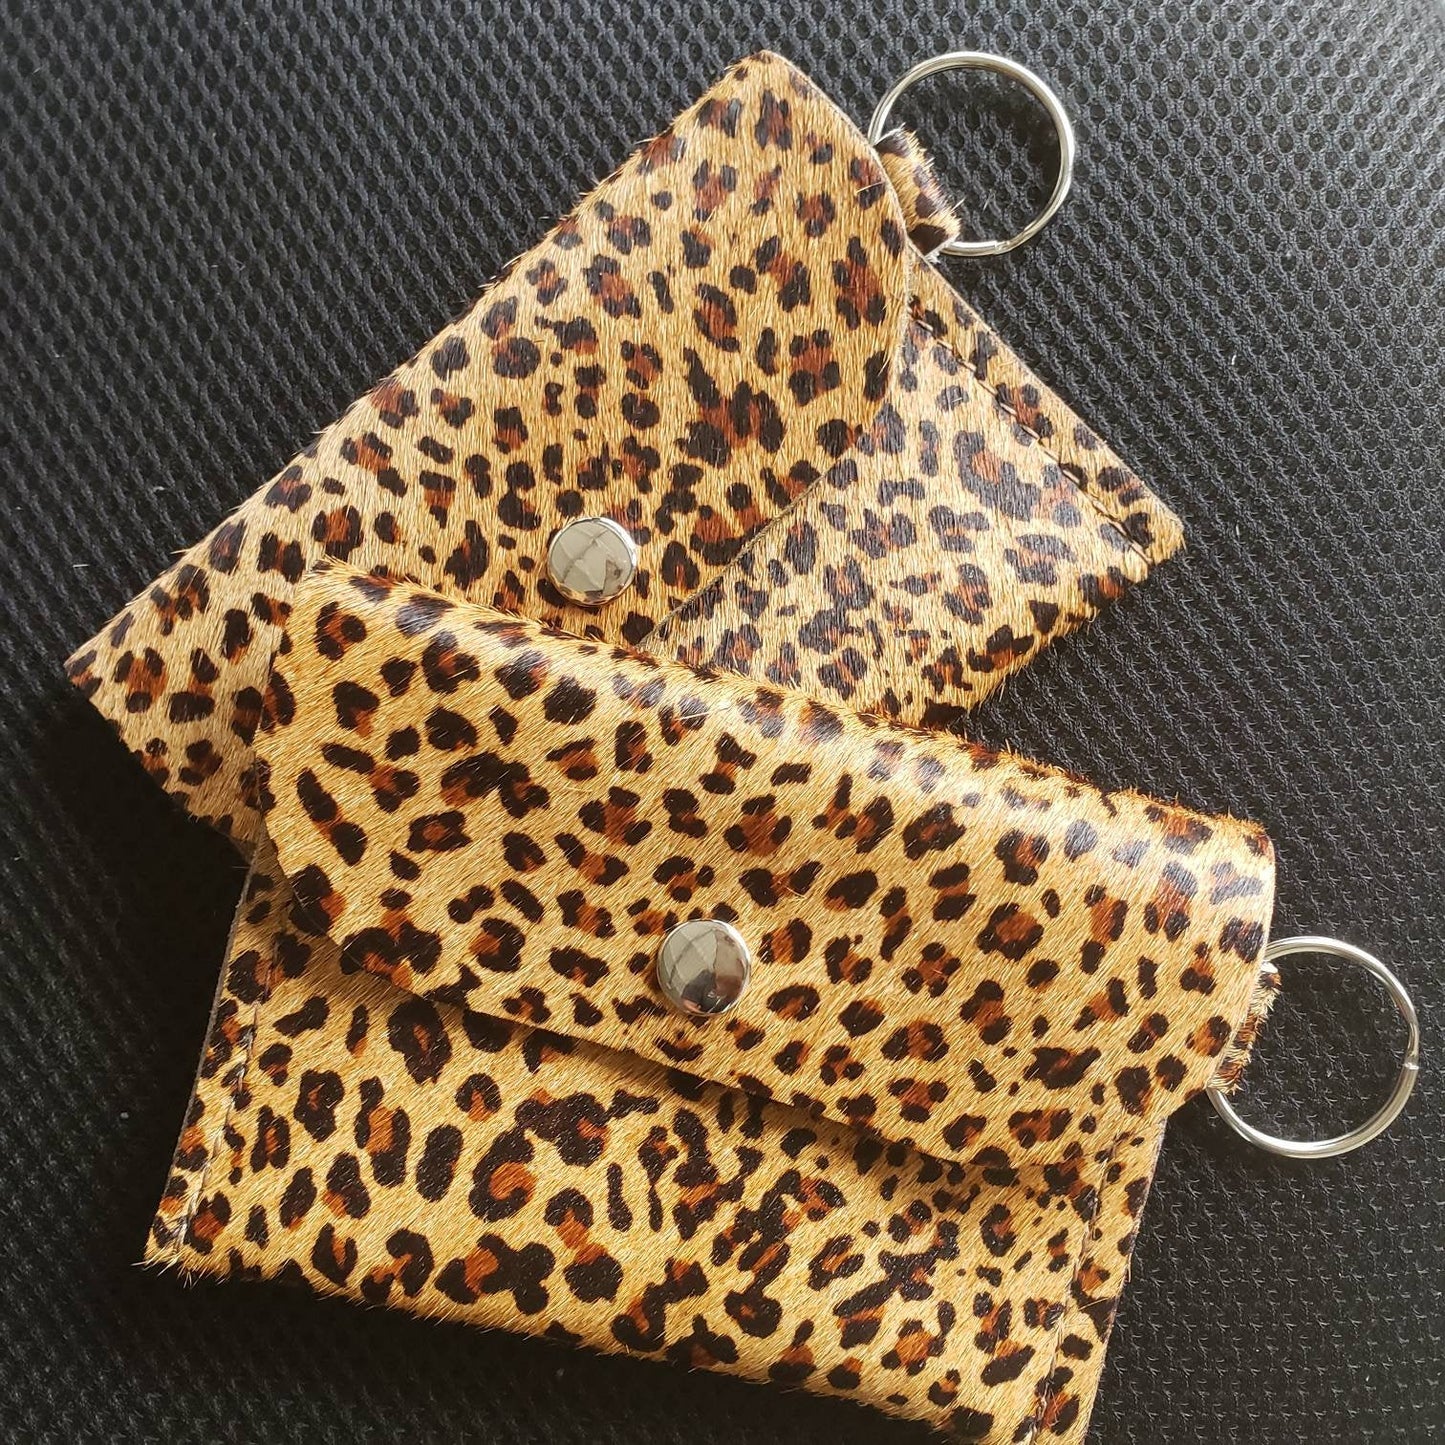 Hair-on Cheetah Leather mini wallet, minimalist wallet, business card wallet.